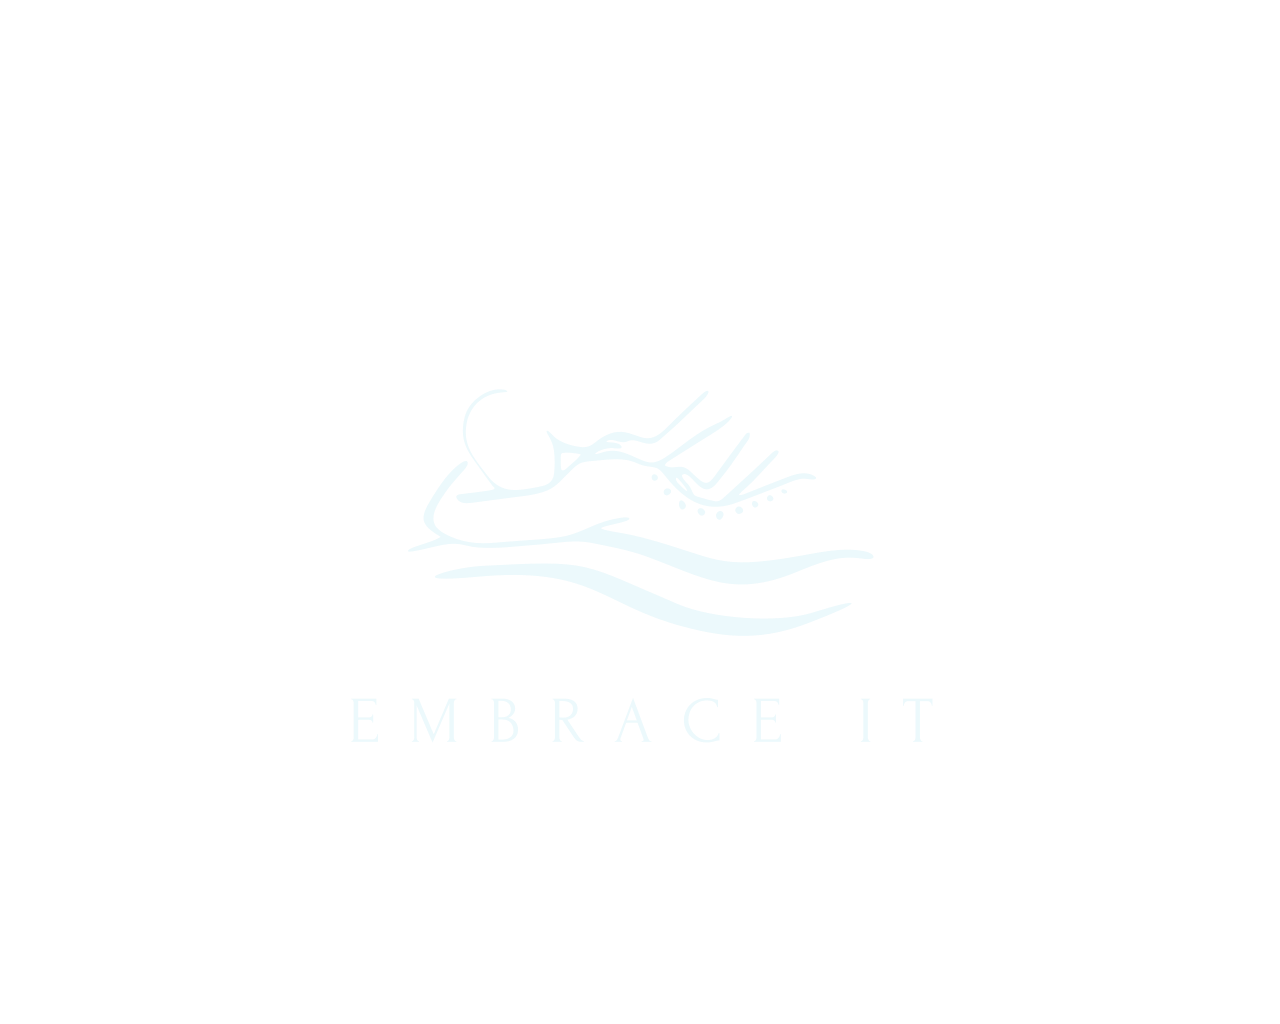 Your Body Works LLC